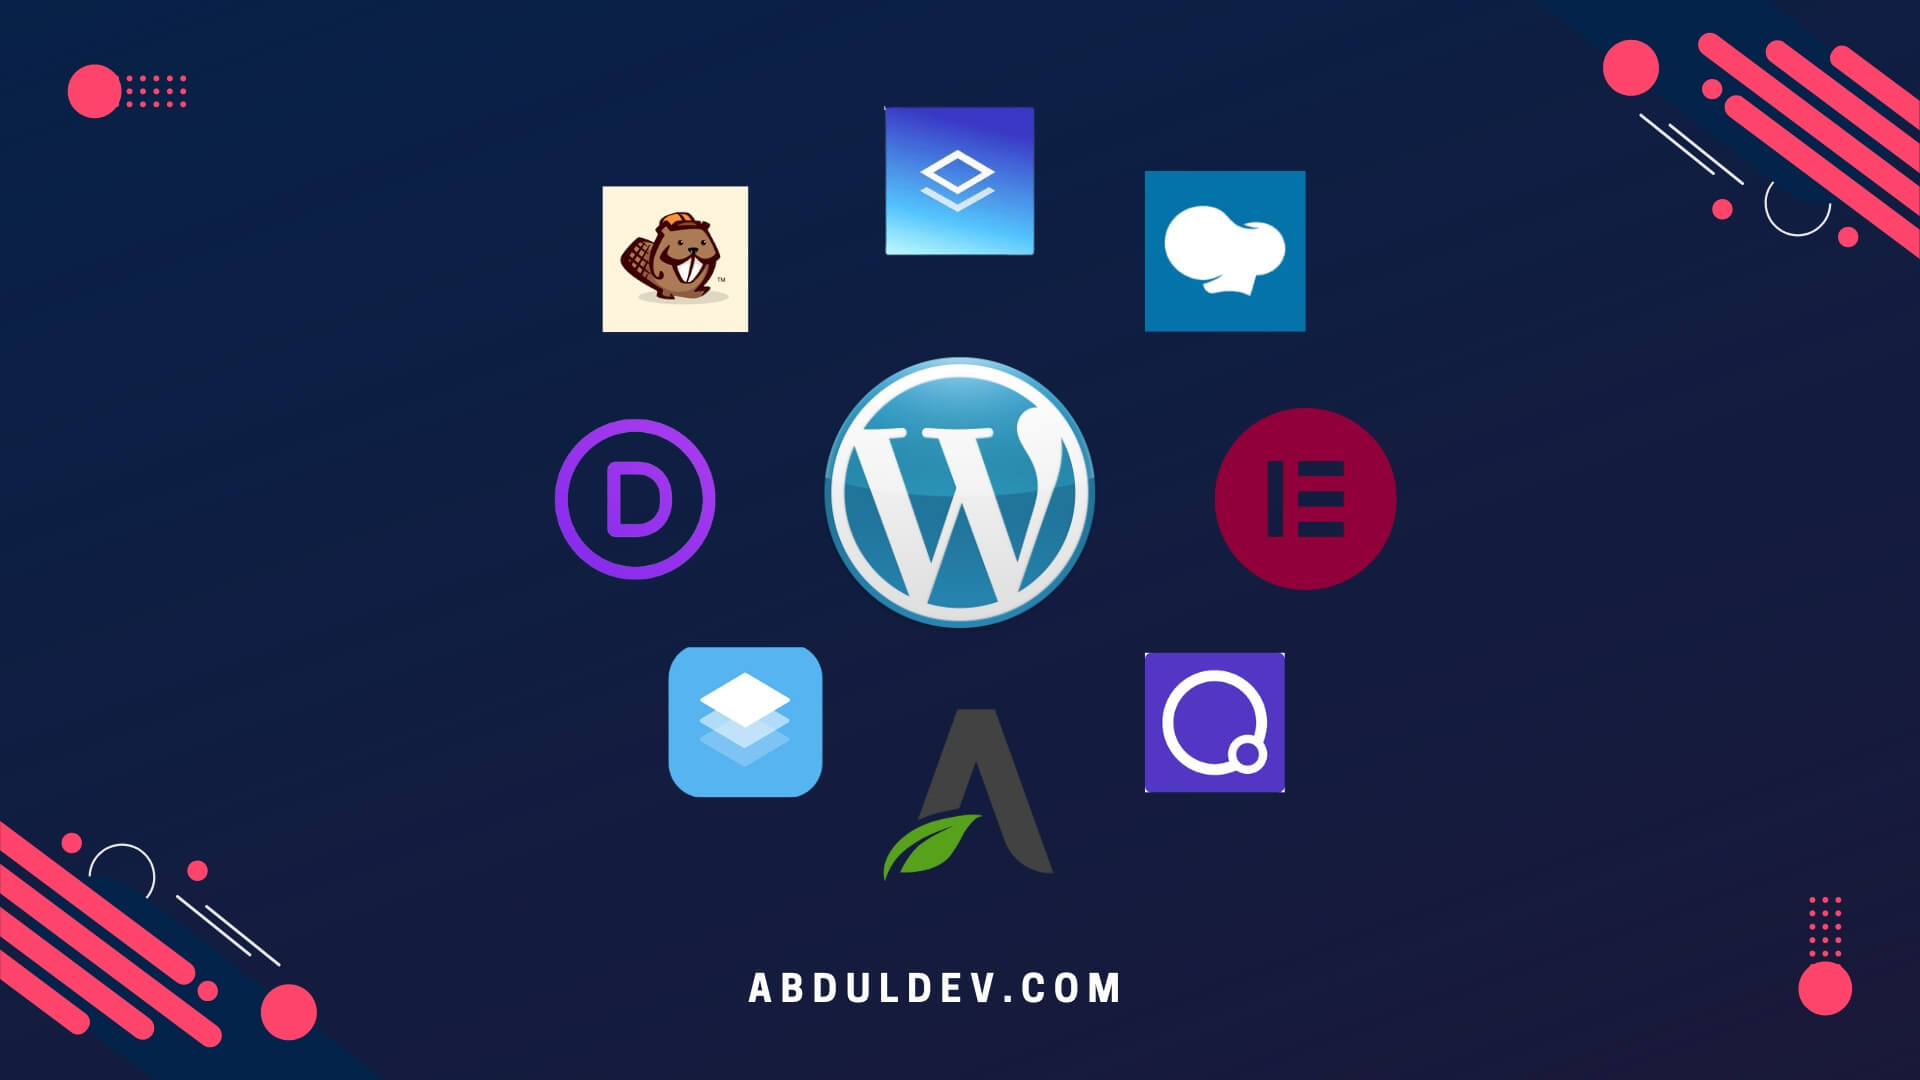 WordPress Page Builder